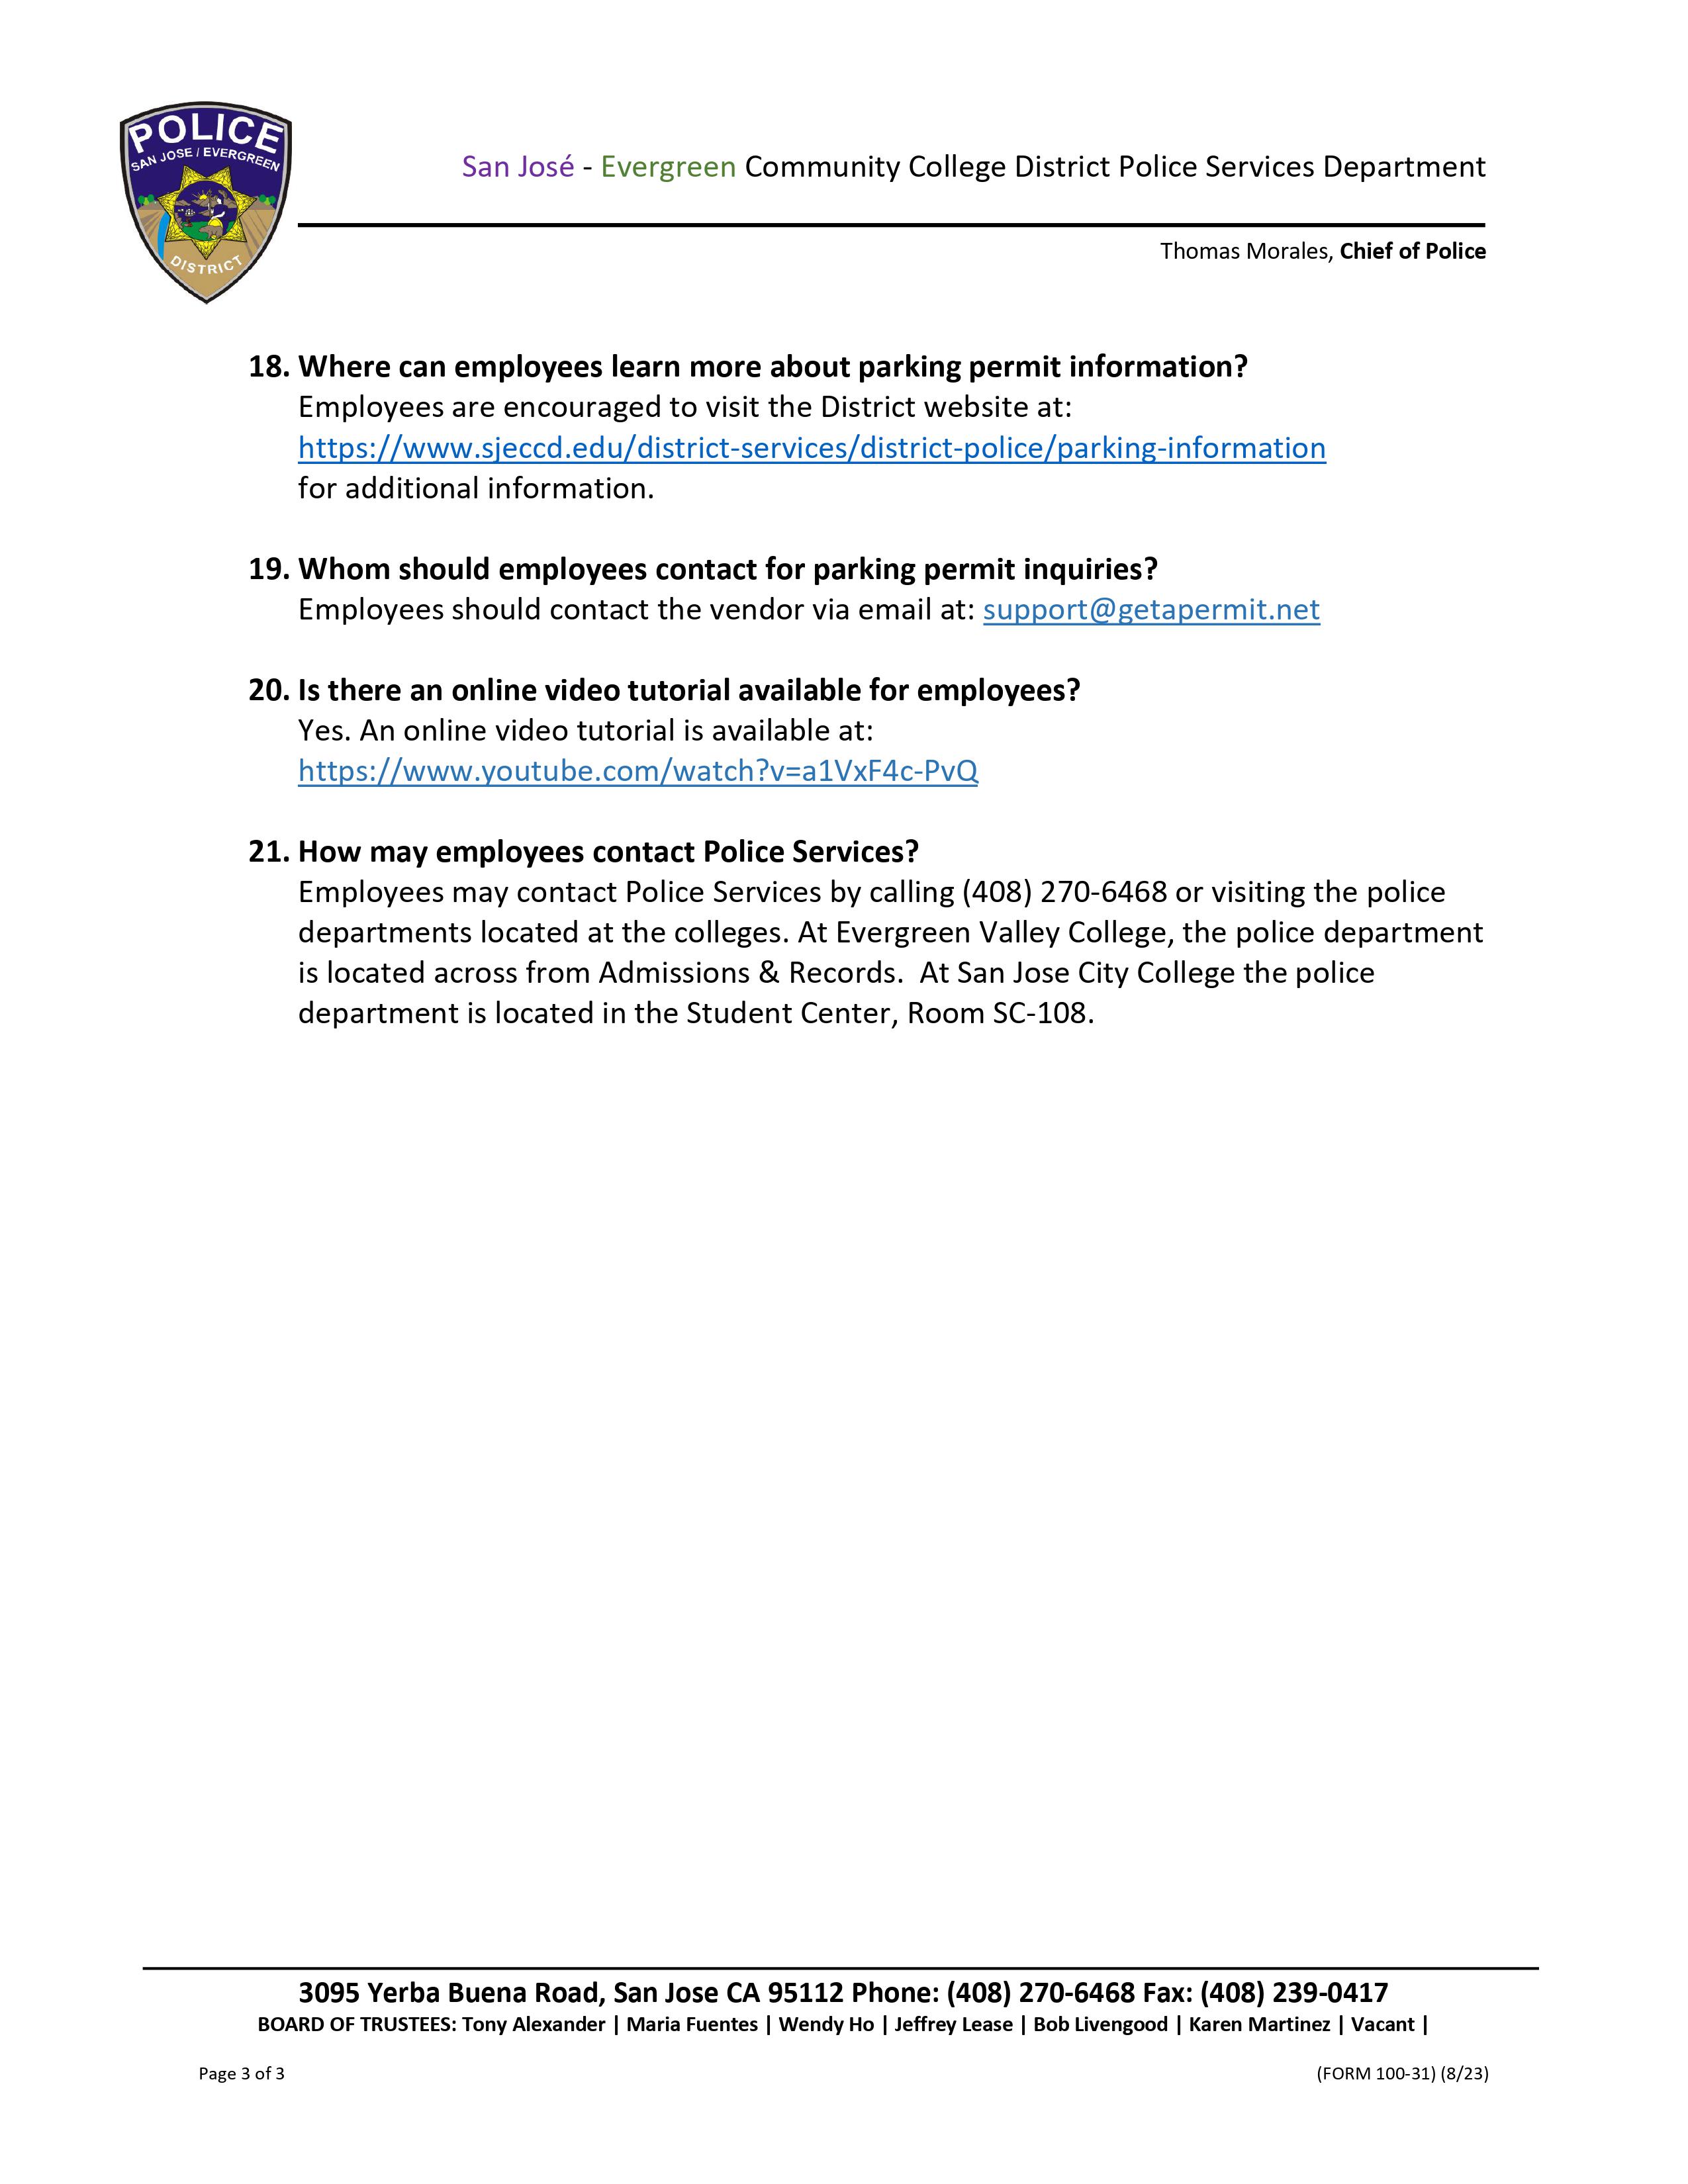 Employee Permit FAQ Screenshot of PDF page 3 of 3